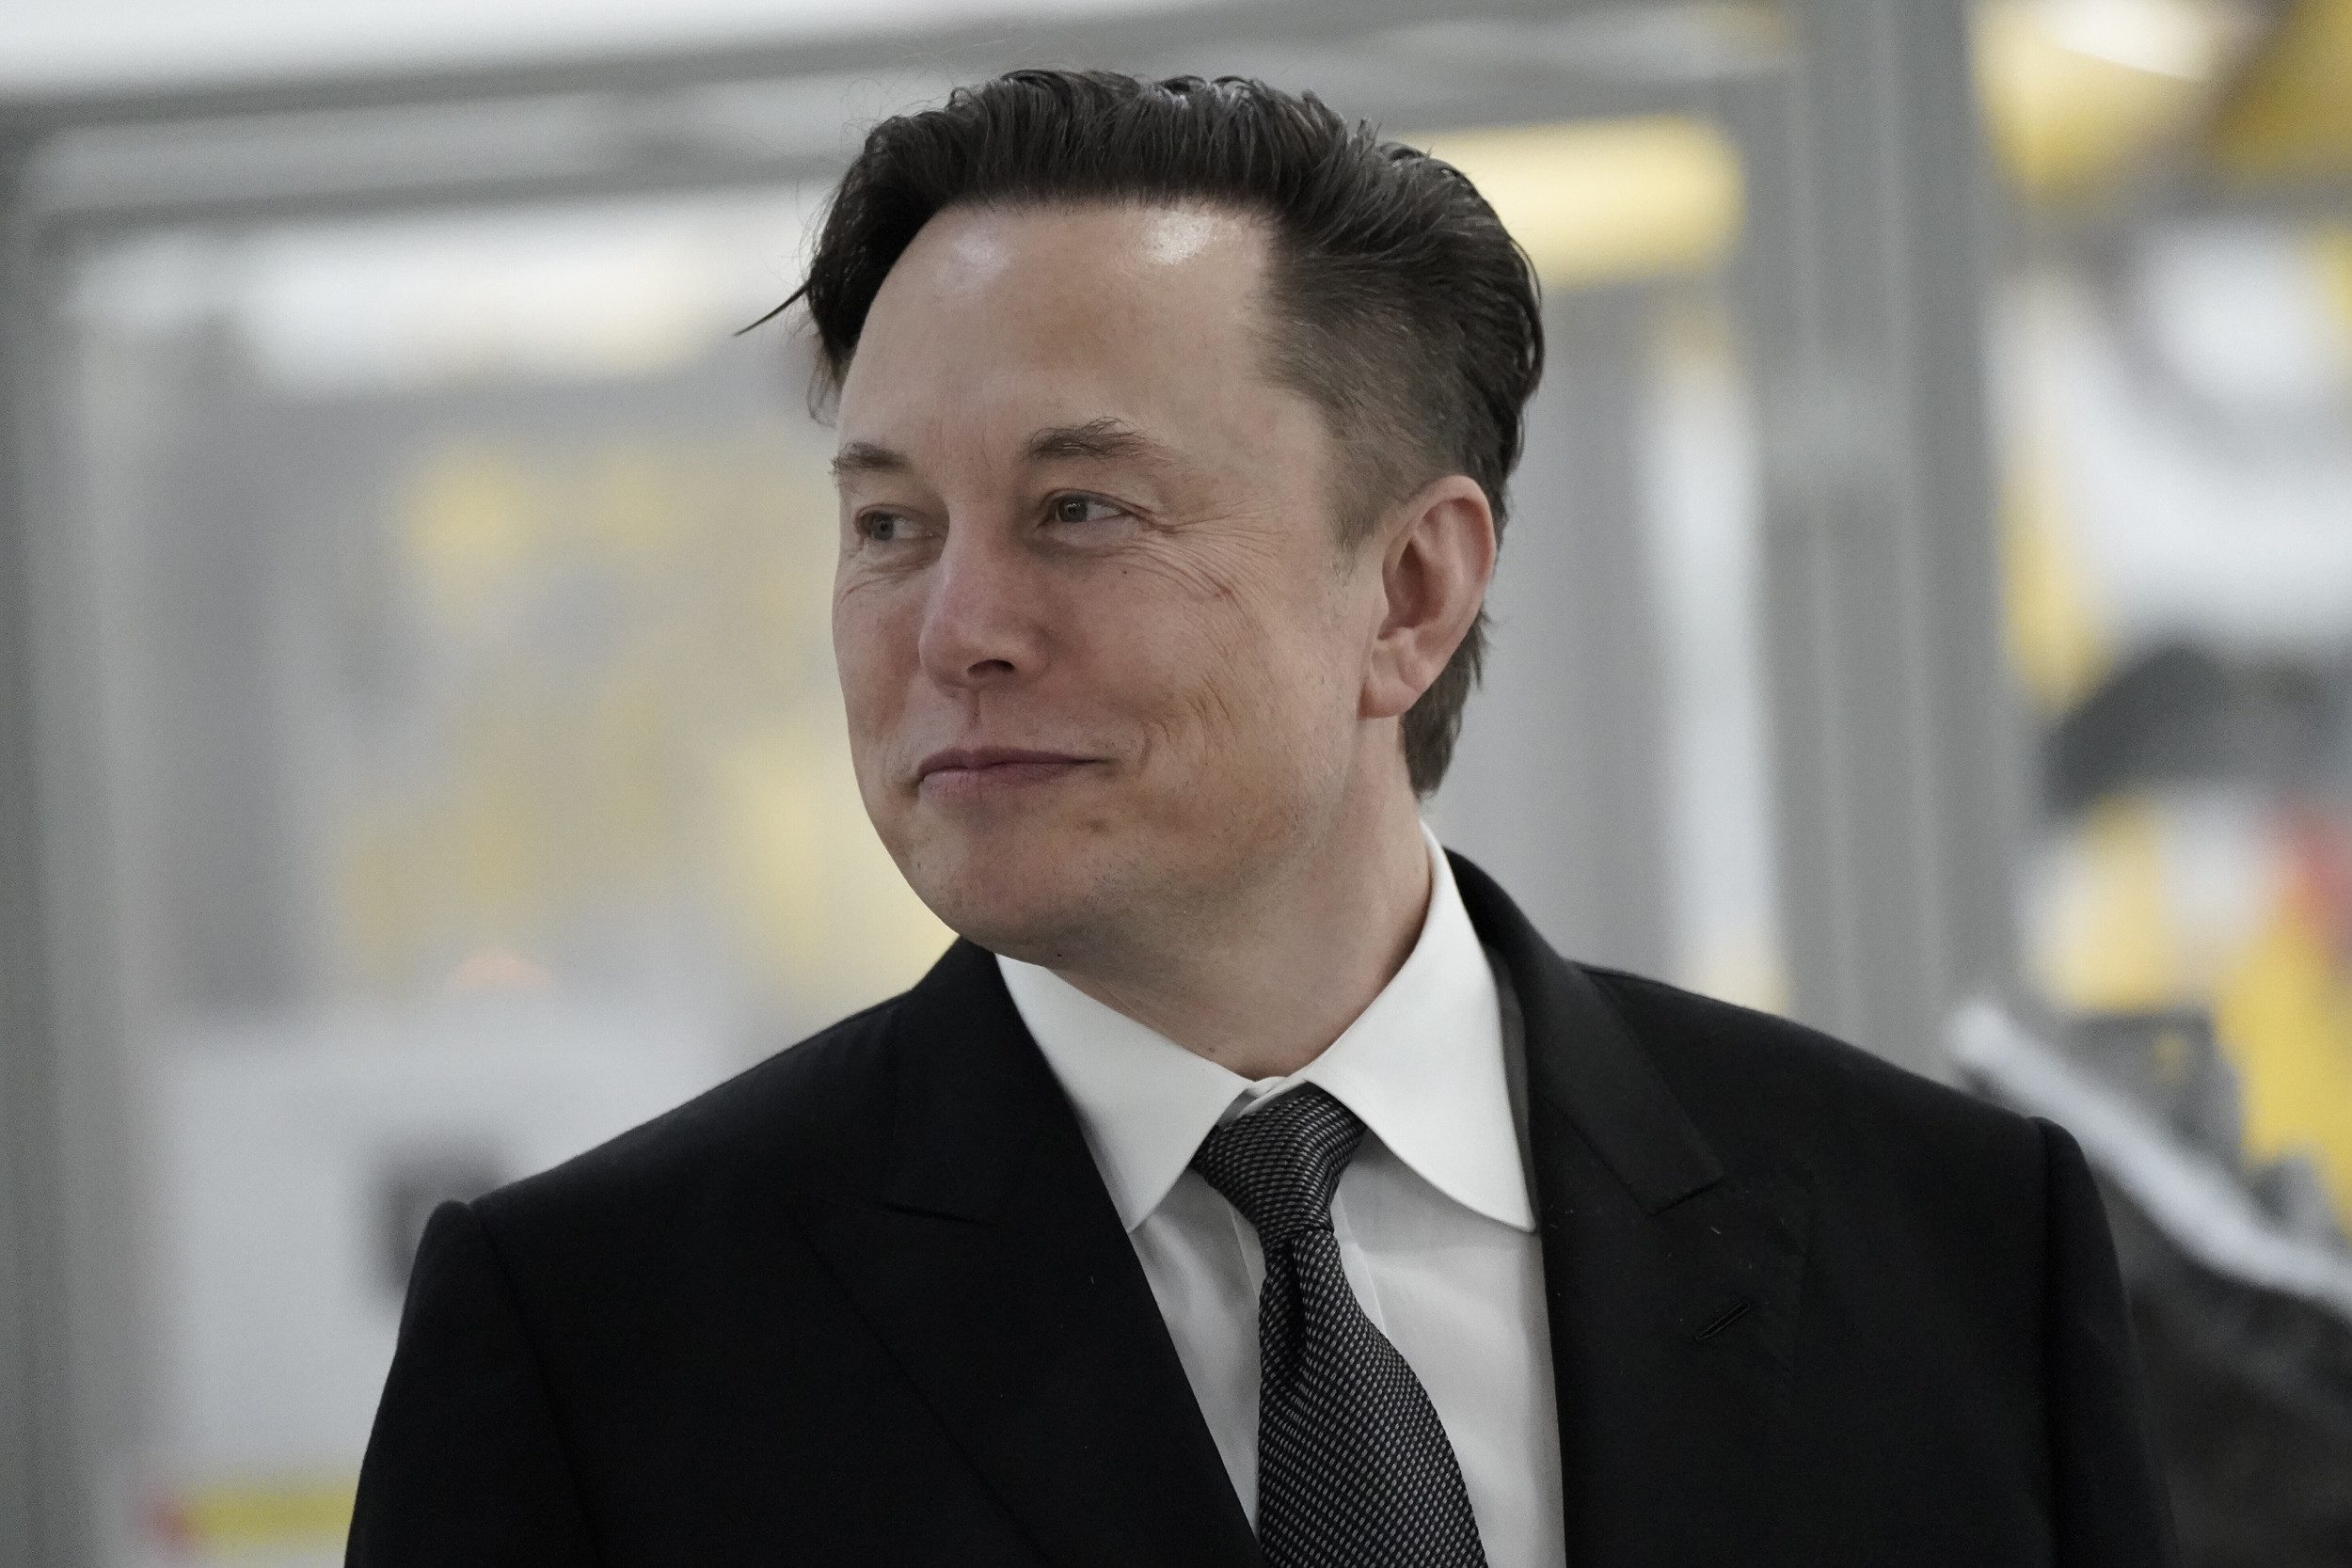 Elon Musk Secures Funding to Buy Twitter